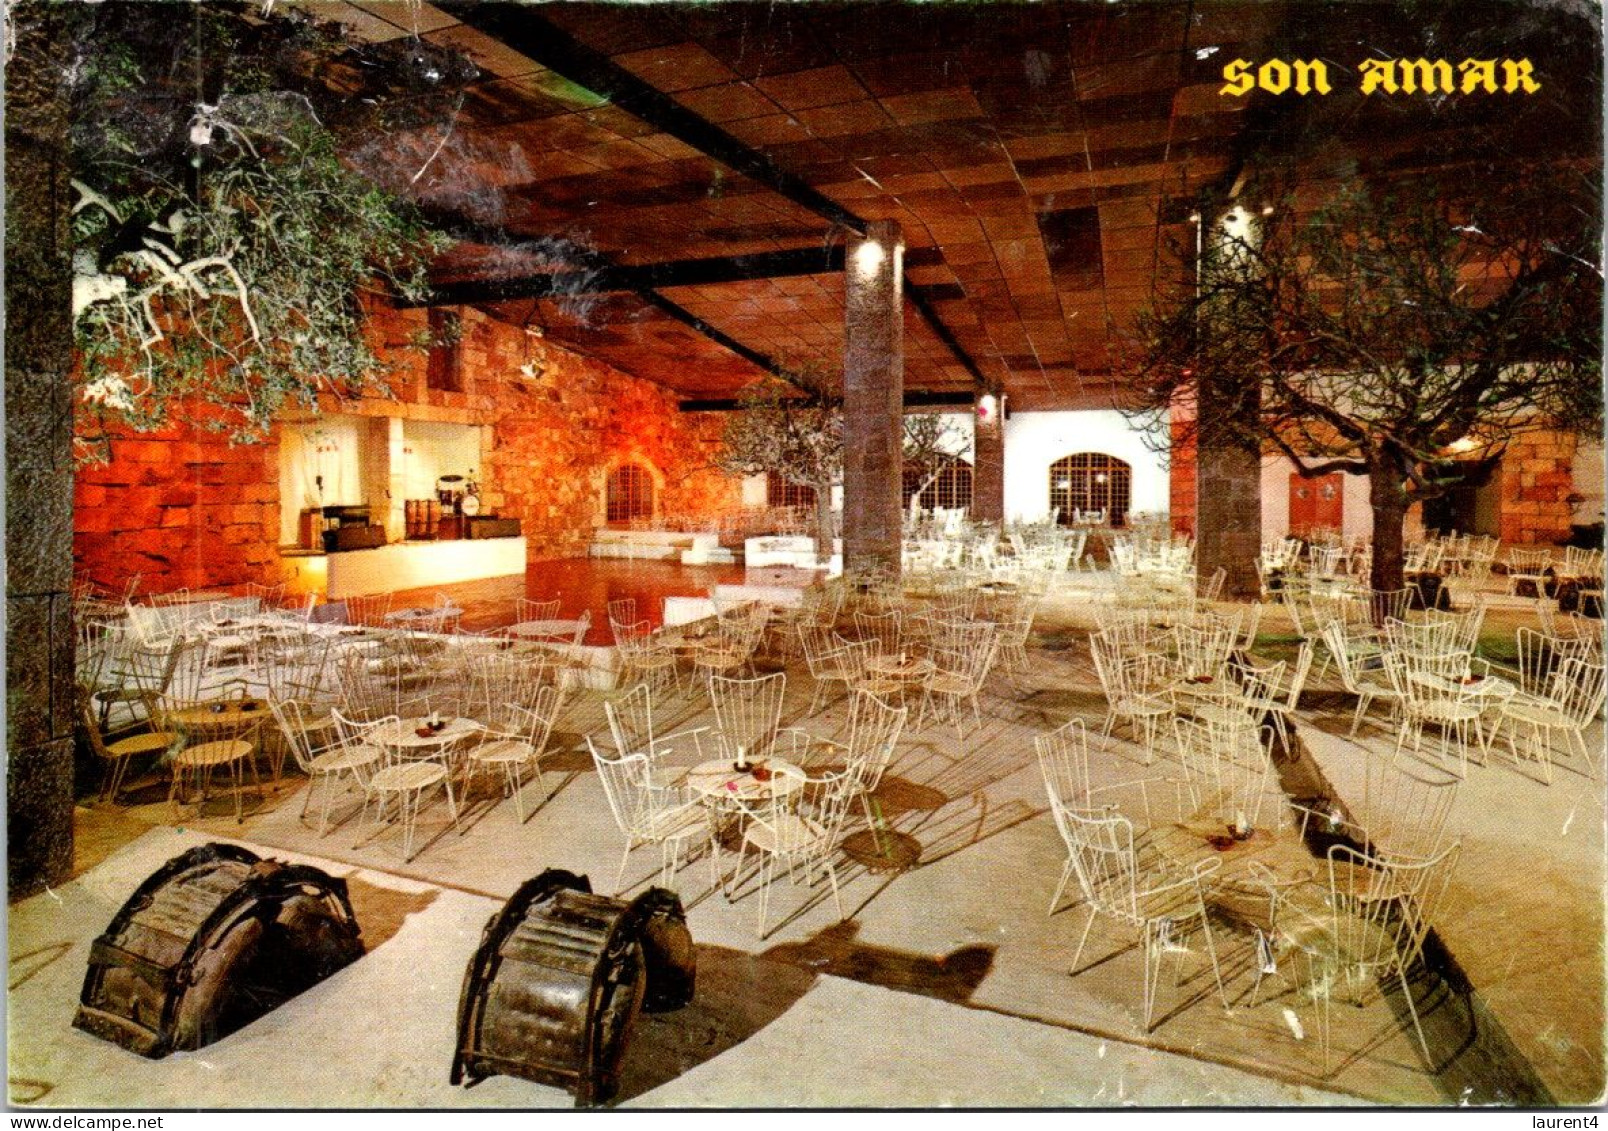 2-5-2024 (3 Z 38) Spain - Son Amar Barbecue Restaurant - Hoteles & Restaurantes